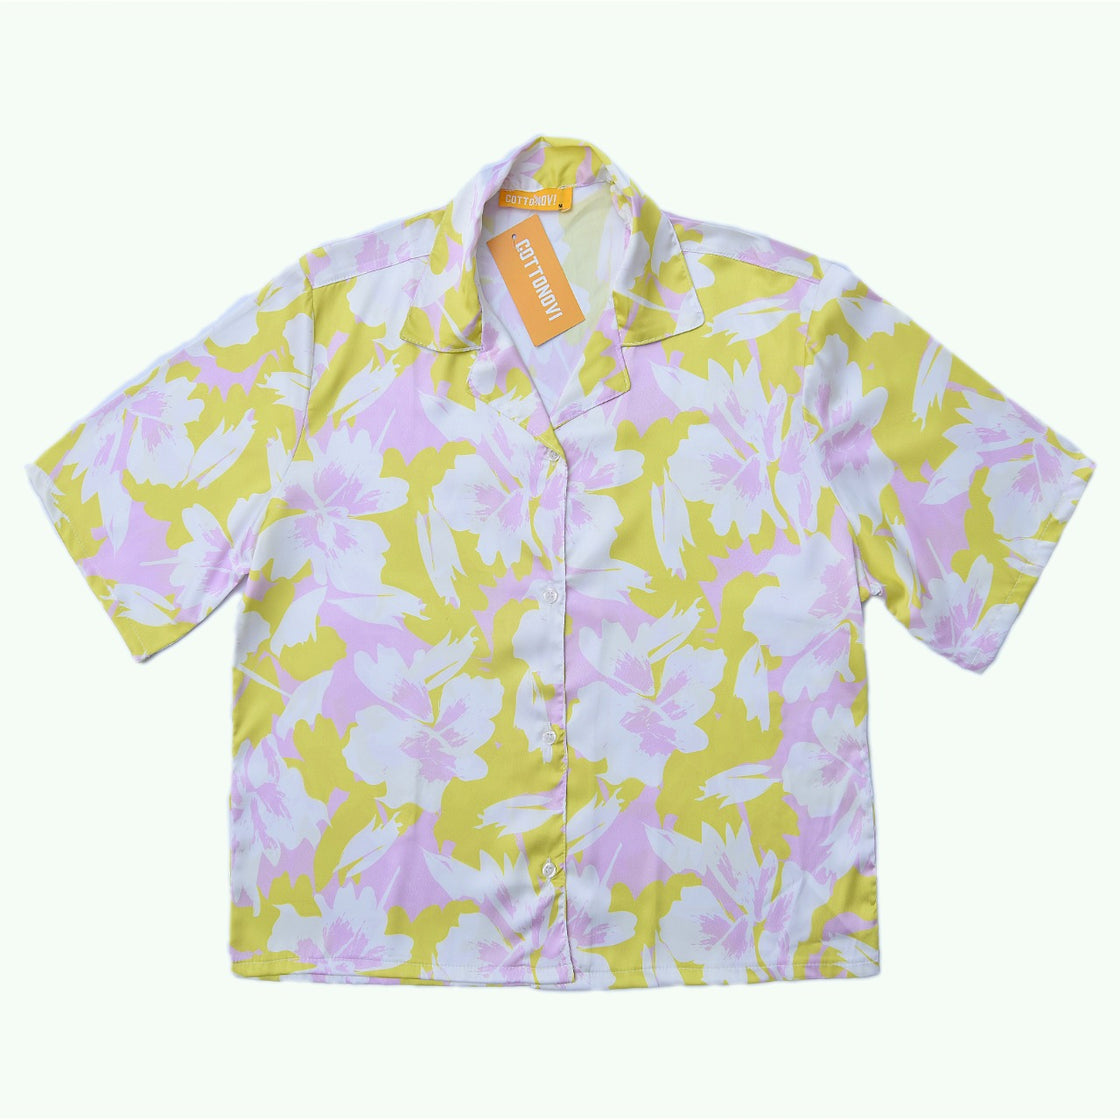 Yellow satin chemise